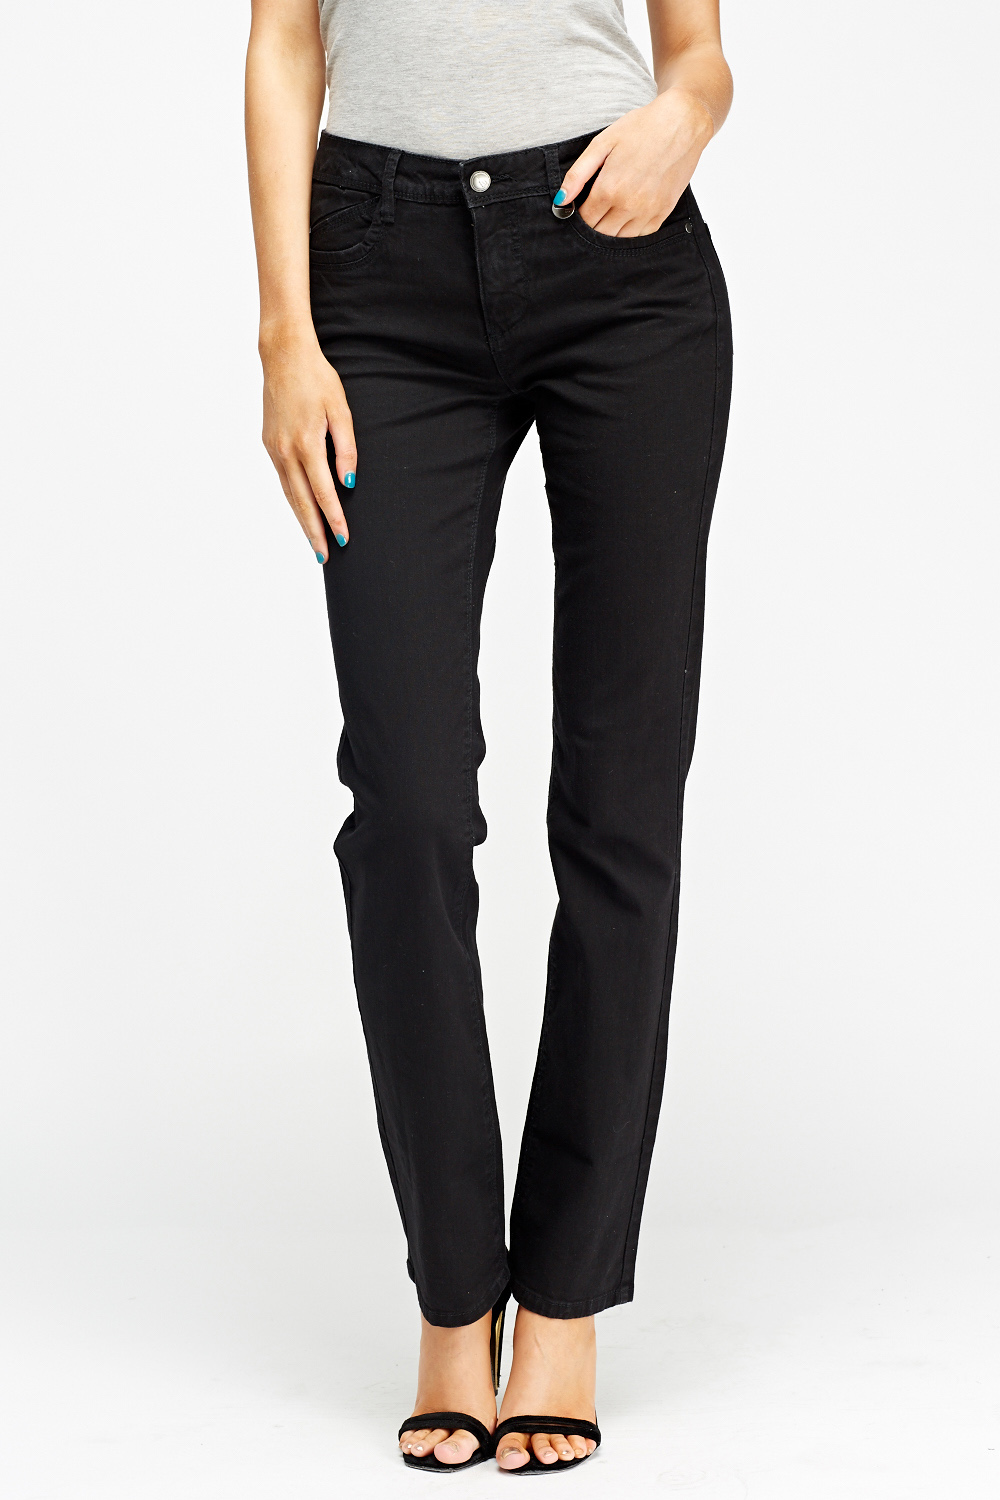 Straight Leg Black Denim Jeans - Just $7